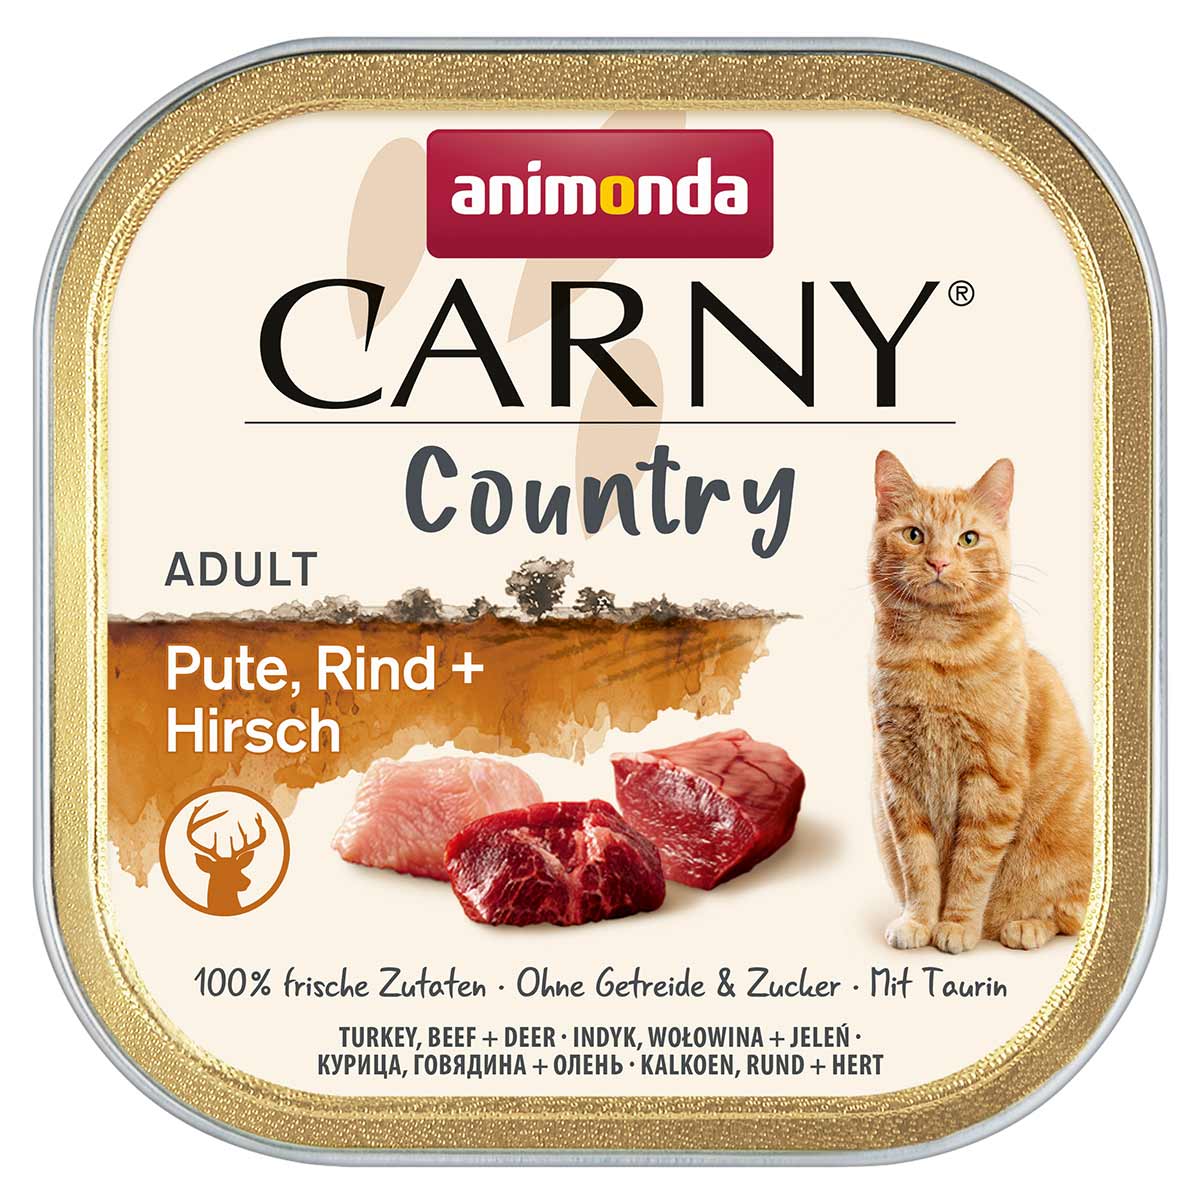 animonda Carny Adult Country Pute, Rind + Hirsch 32x100g von animonda Carny